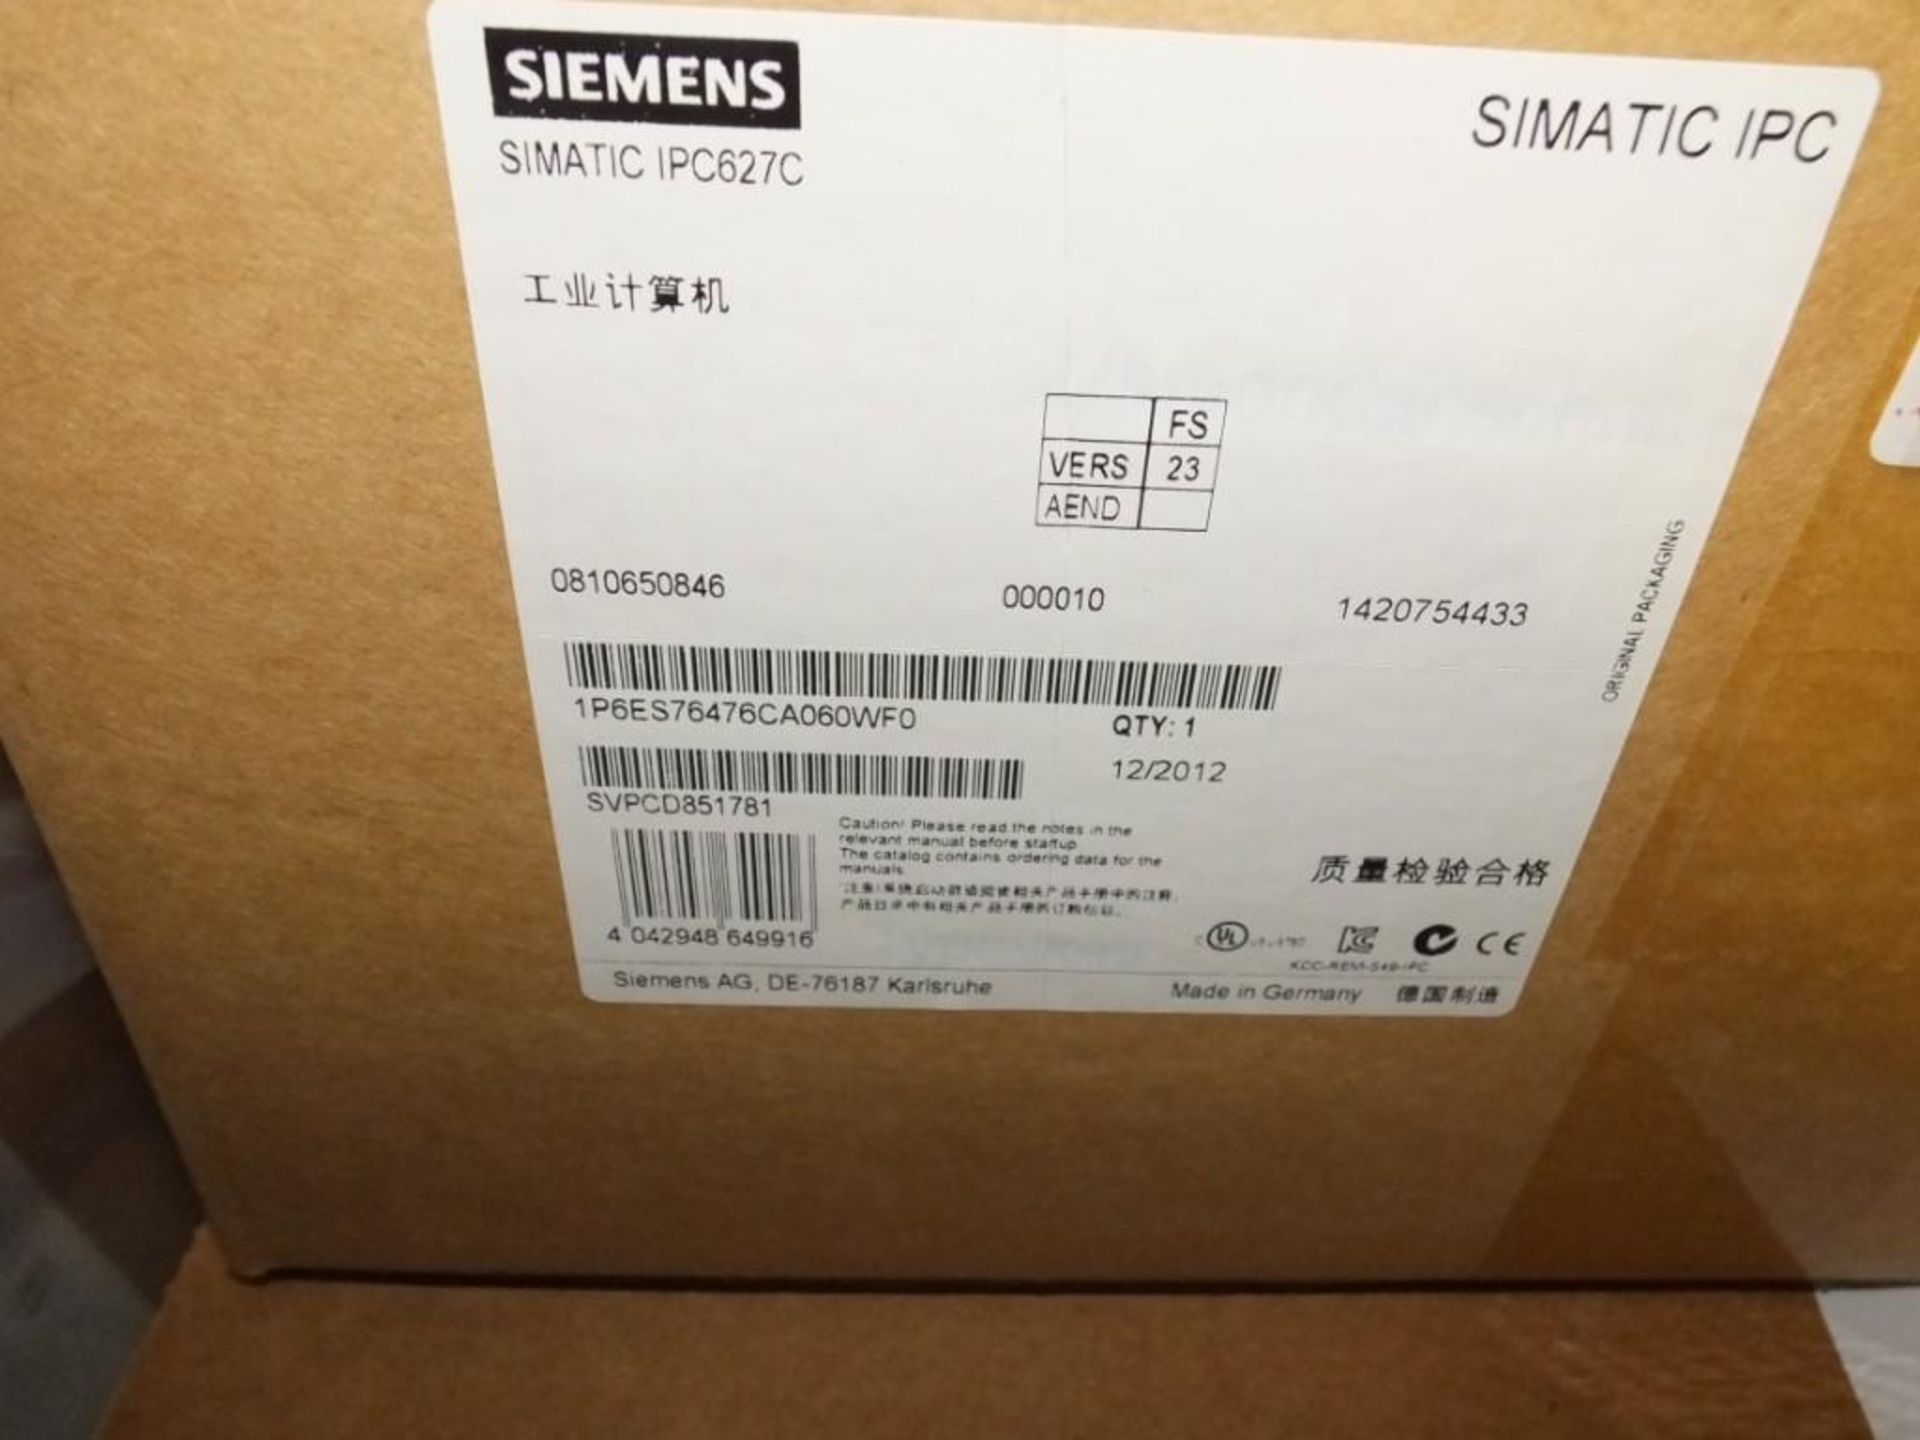 Siemens Simatic IPC627C Industrial Computer - Image 3 of 3